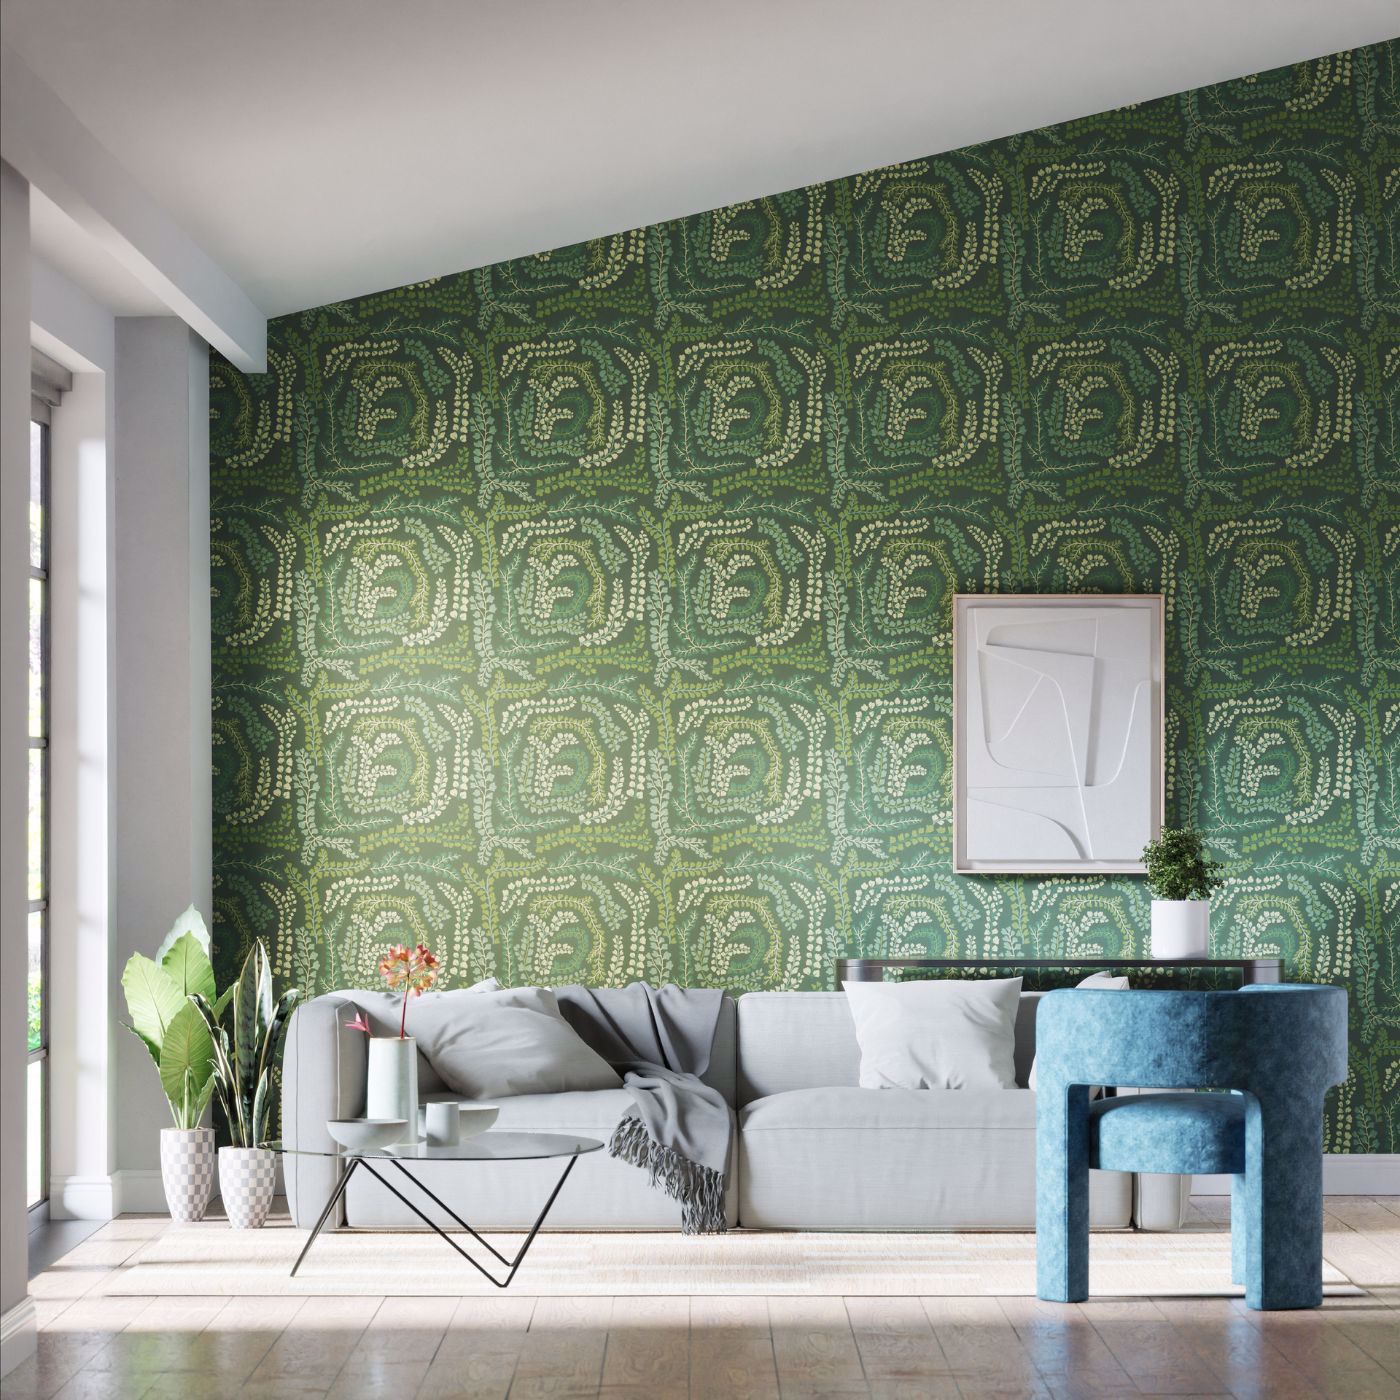 Fayola Fig Leaf/Clover Wallpaper by HAR